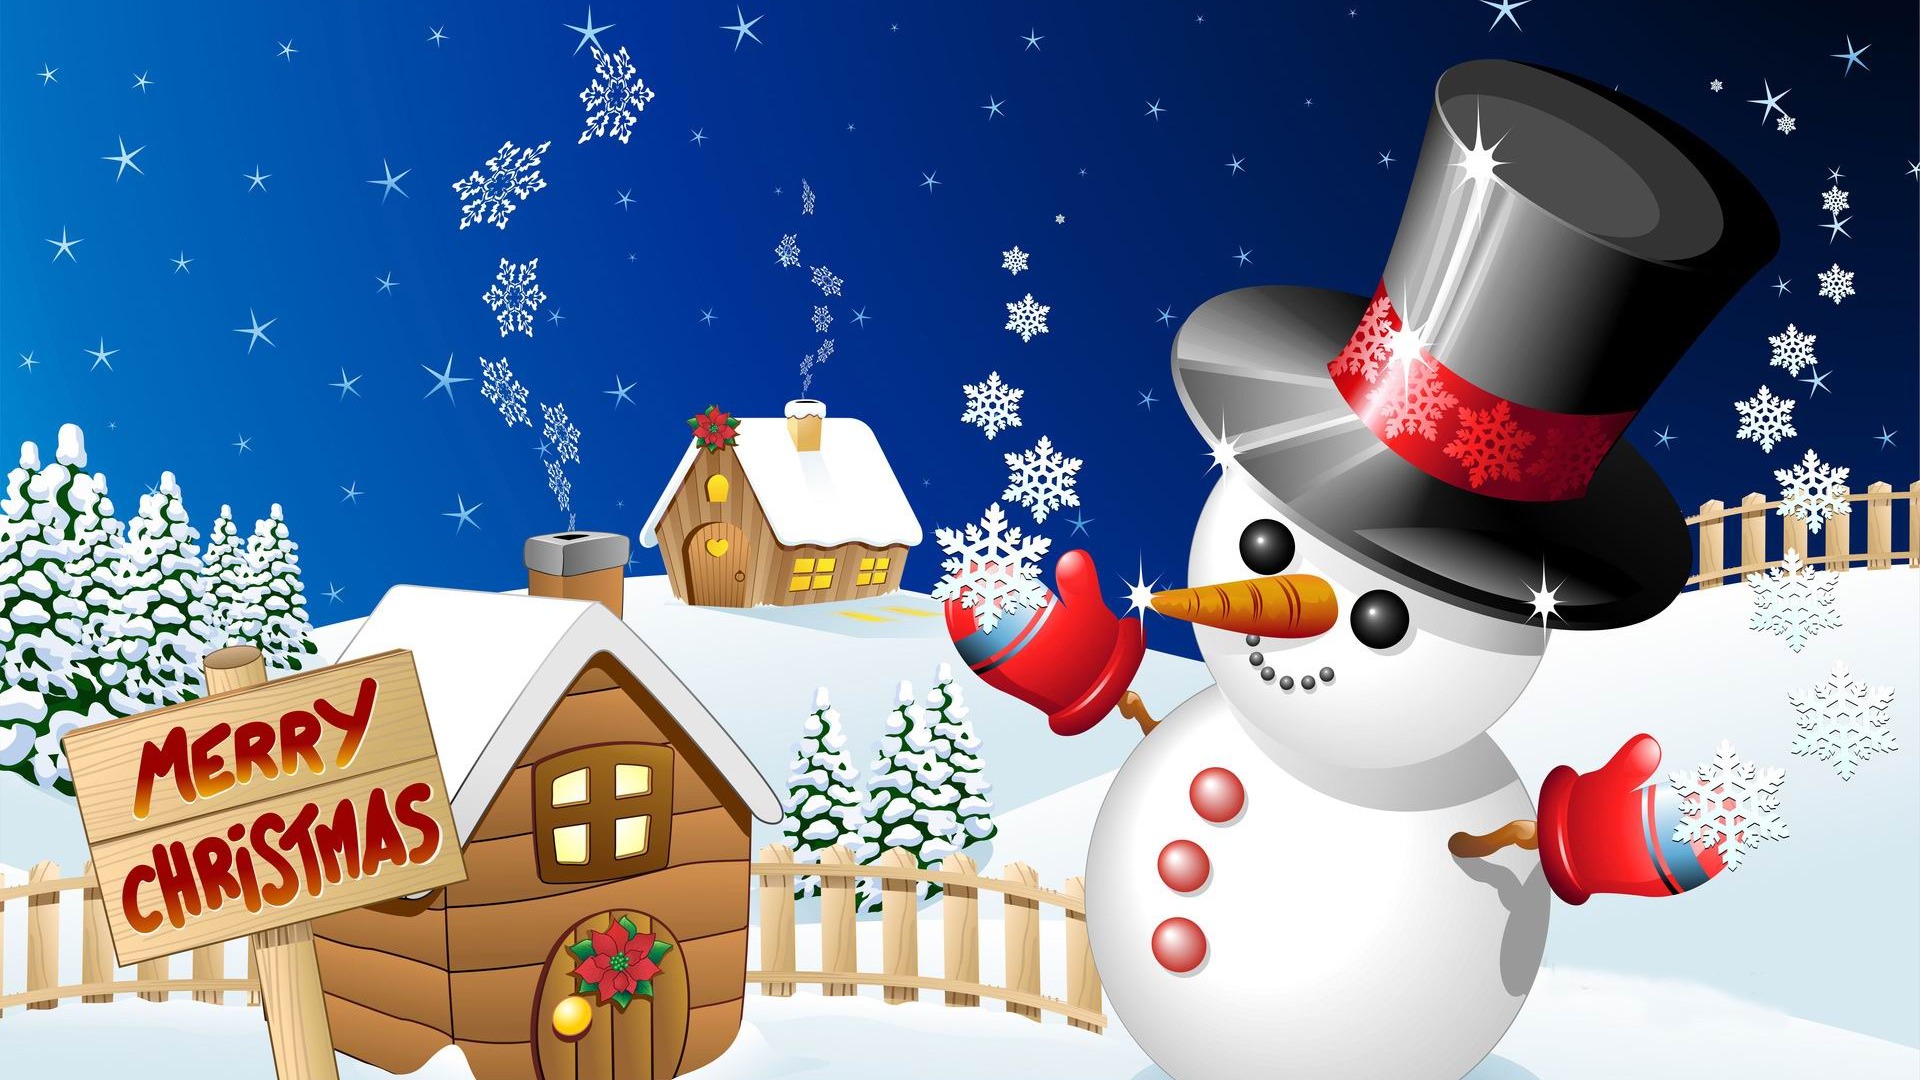 Cute Snowman Christmas Background Image HD 1920x1080